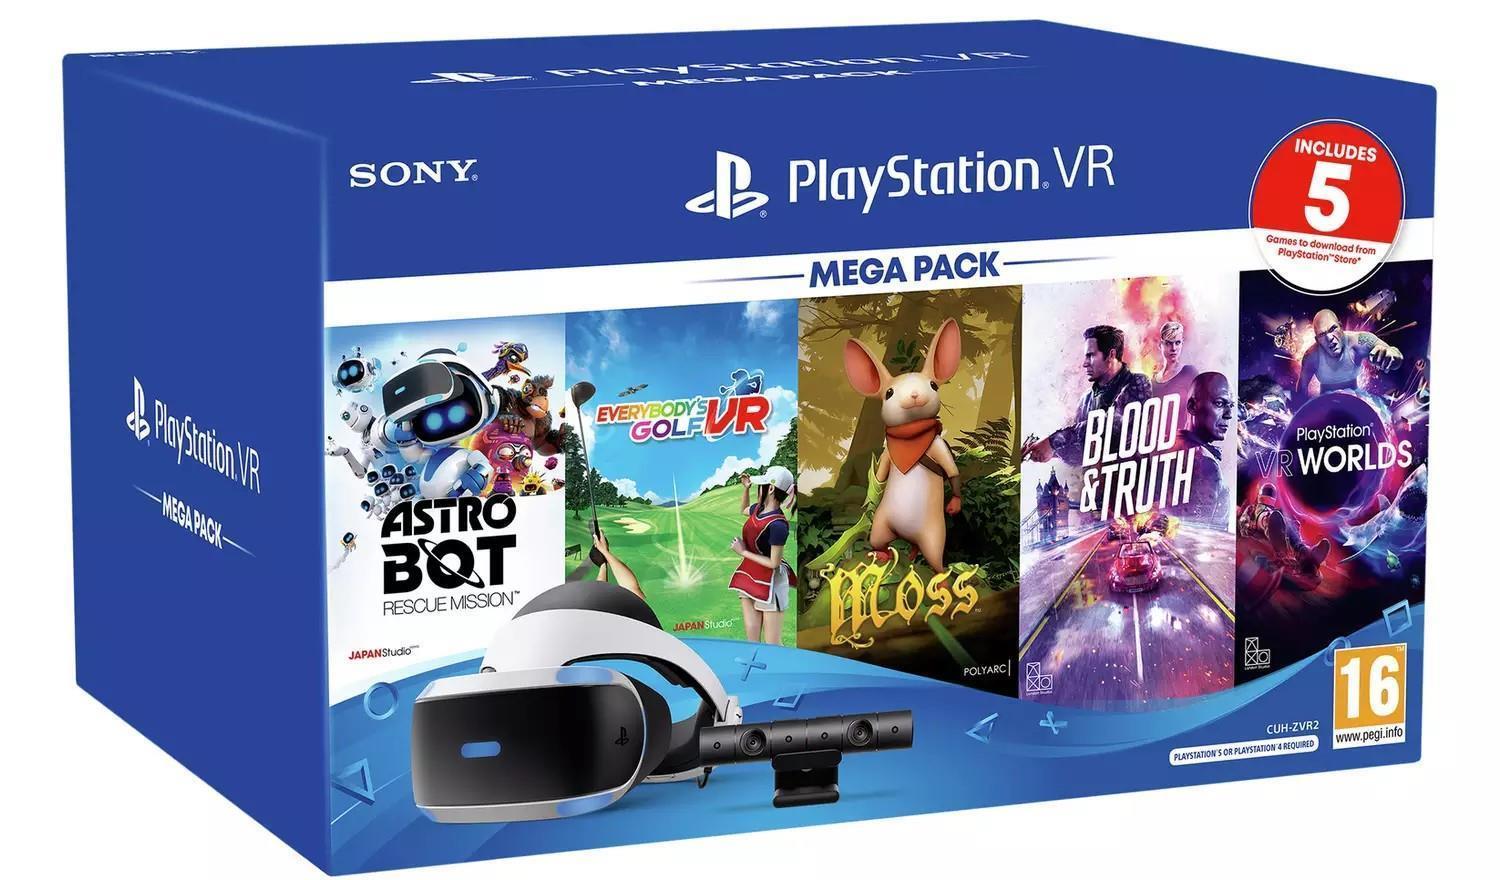 PlayStation VR Variety Pack